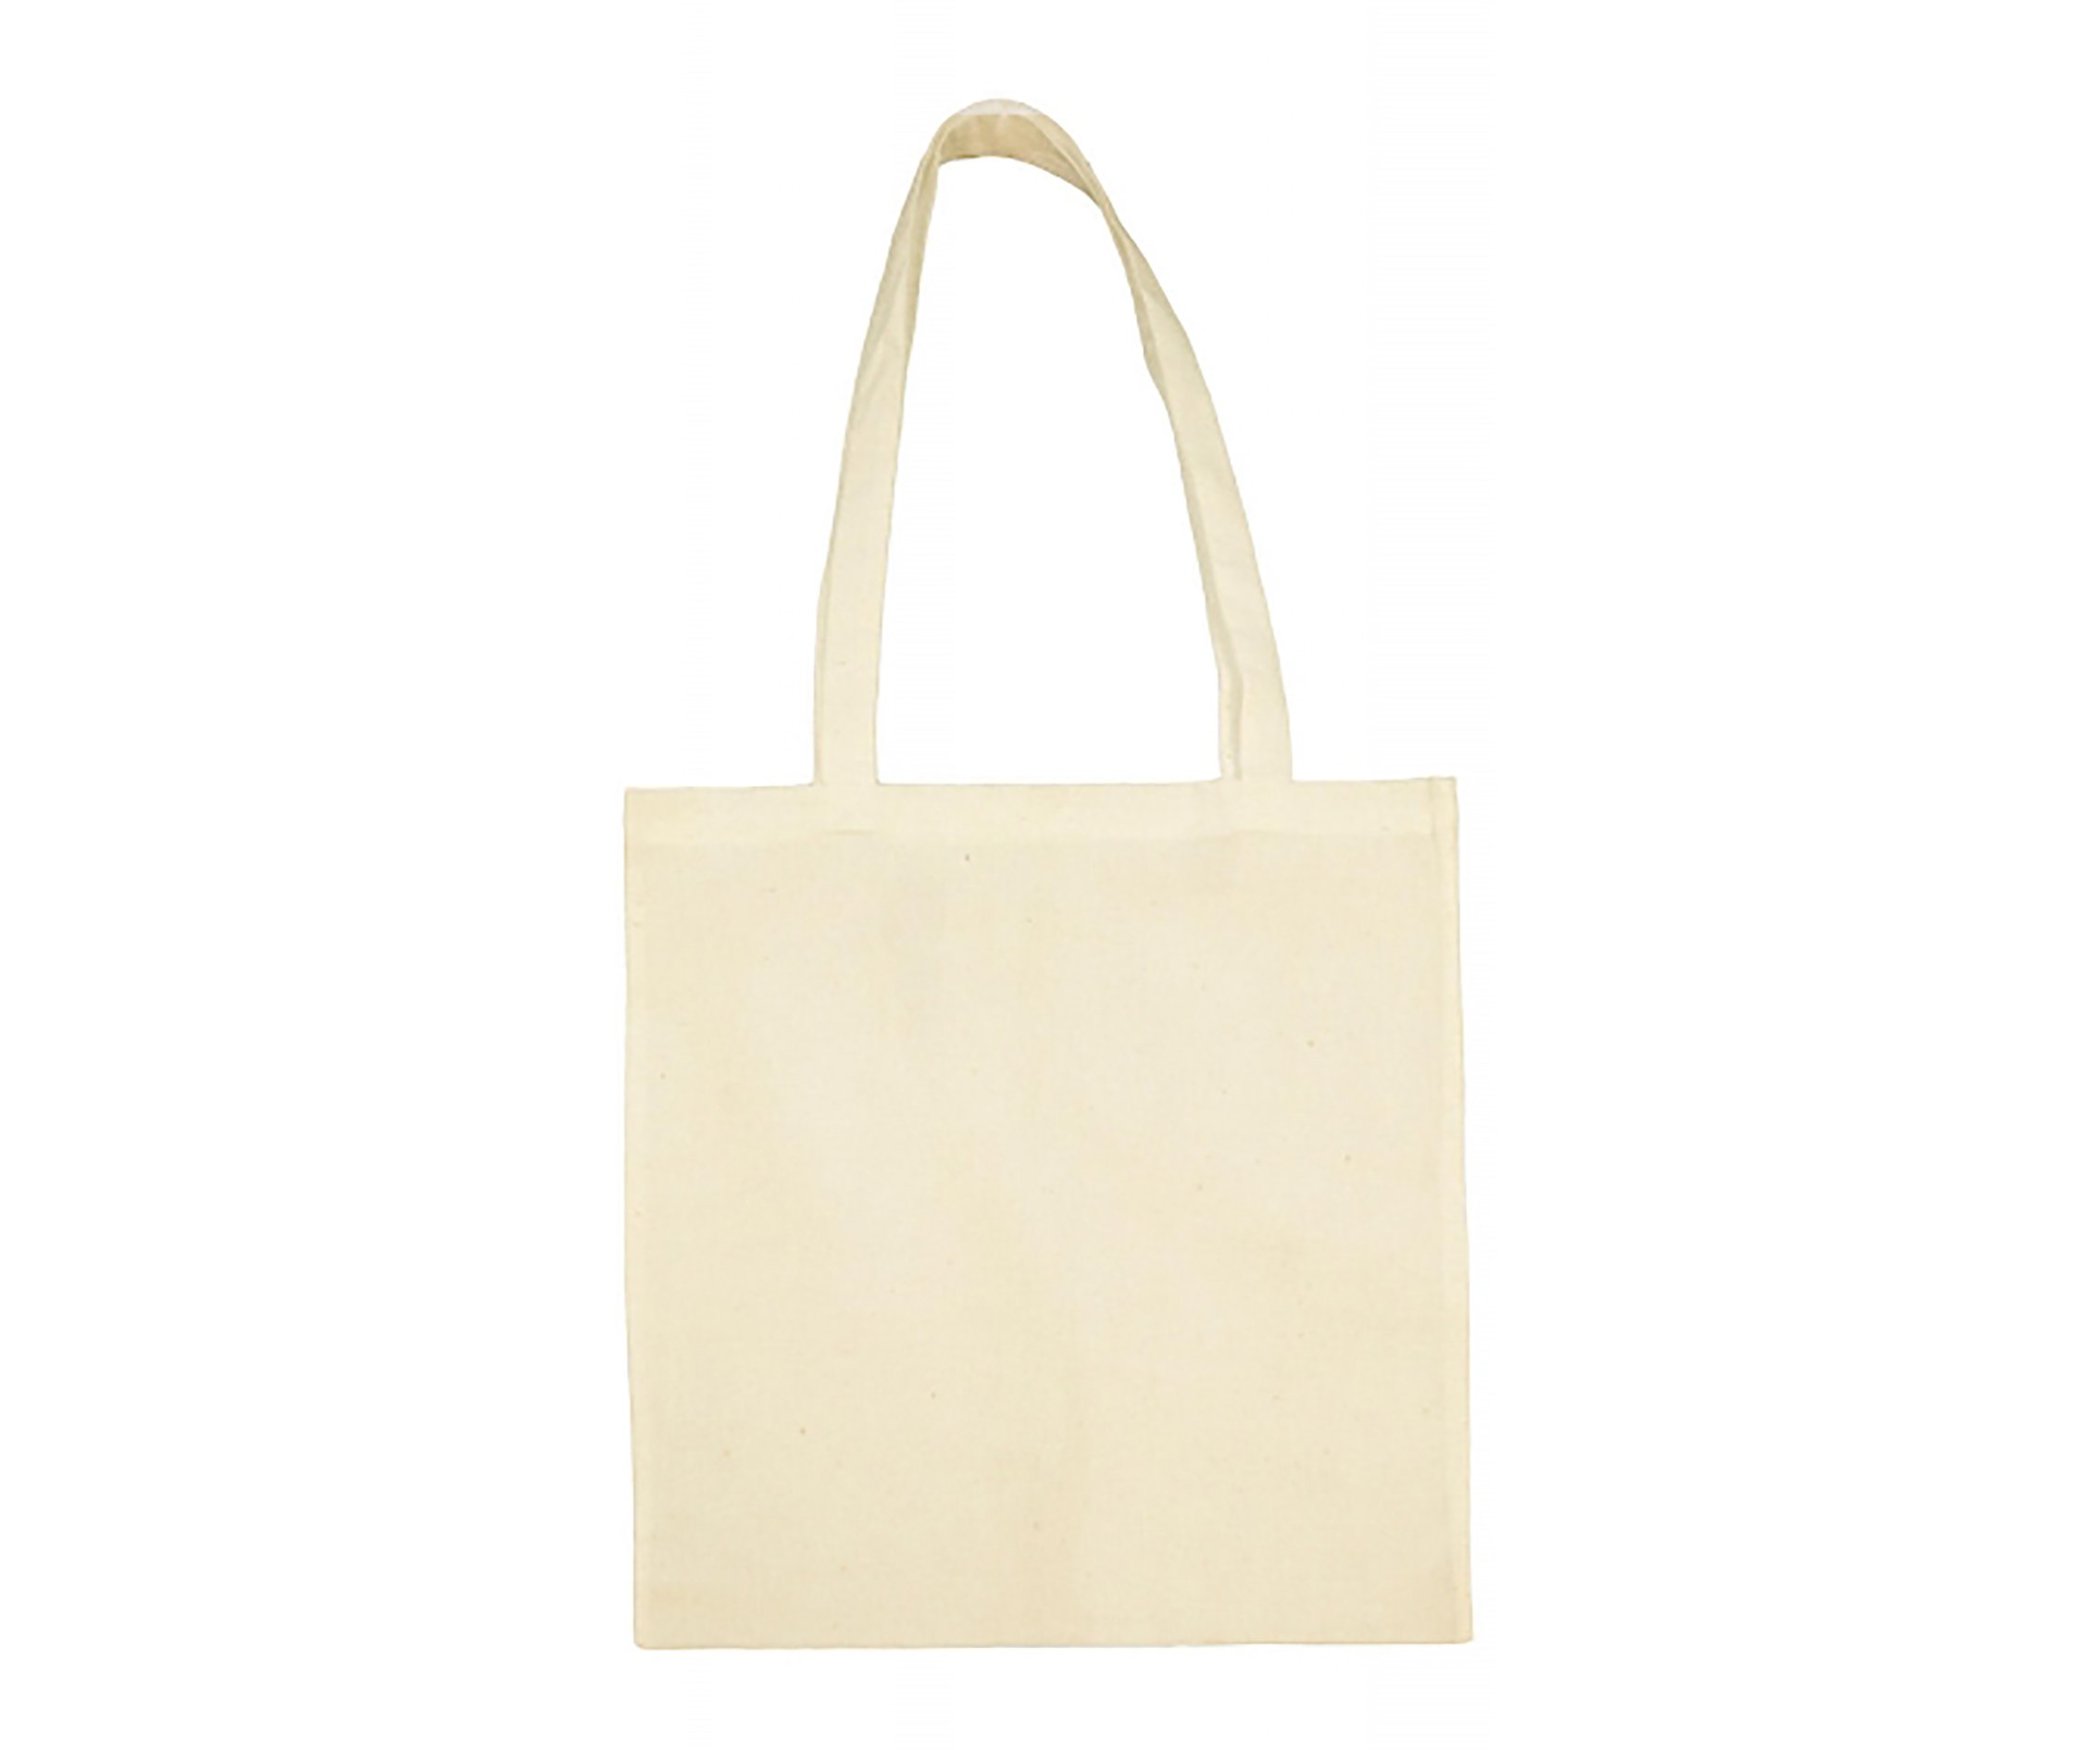 Jassz Bags Beech Cotton Large Handle Shopping Bag/Tote One Size Apricot Brandy